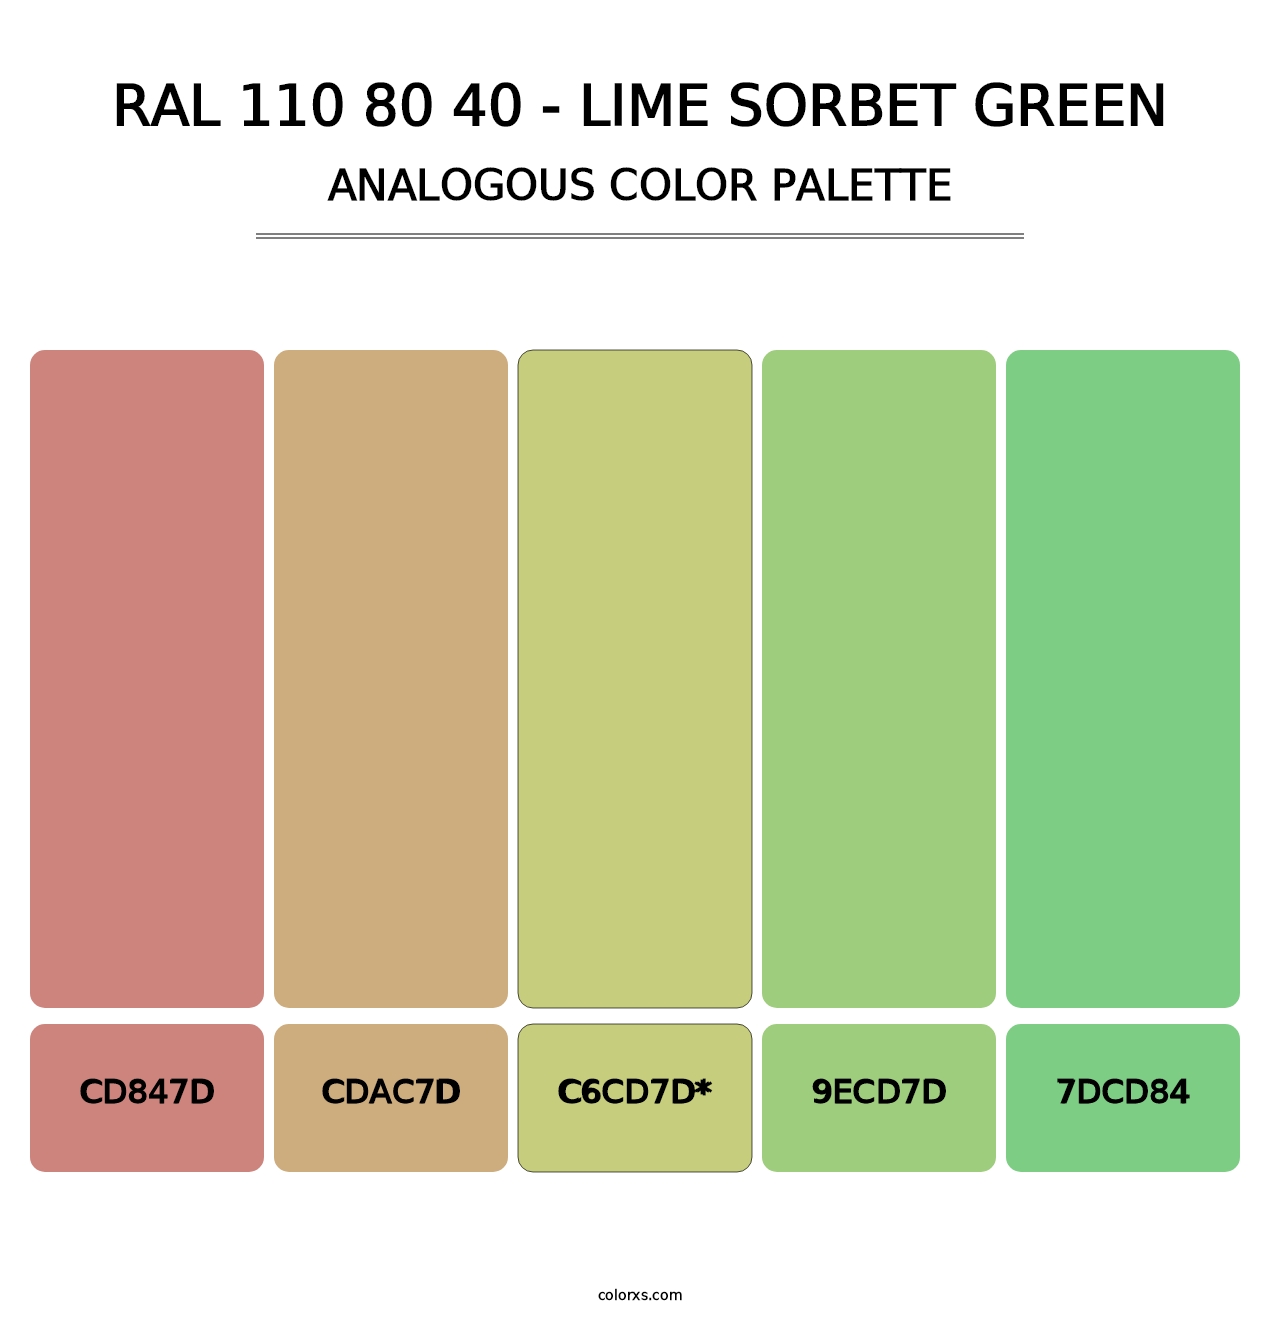 RAL 110 80 40 - Lime Sorbet Green - Analogous Color Palette